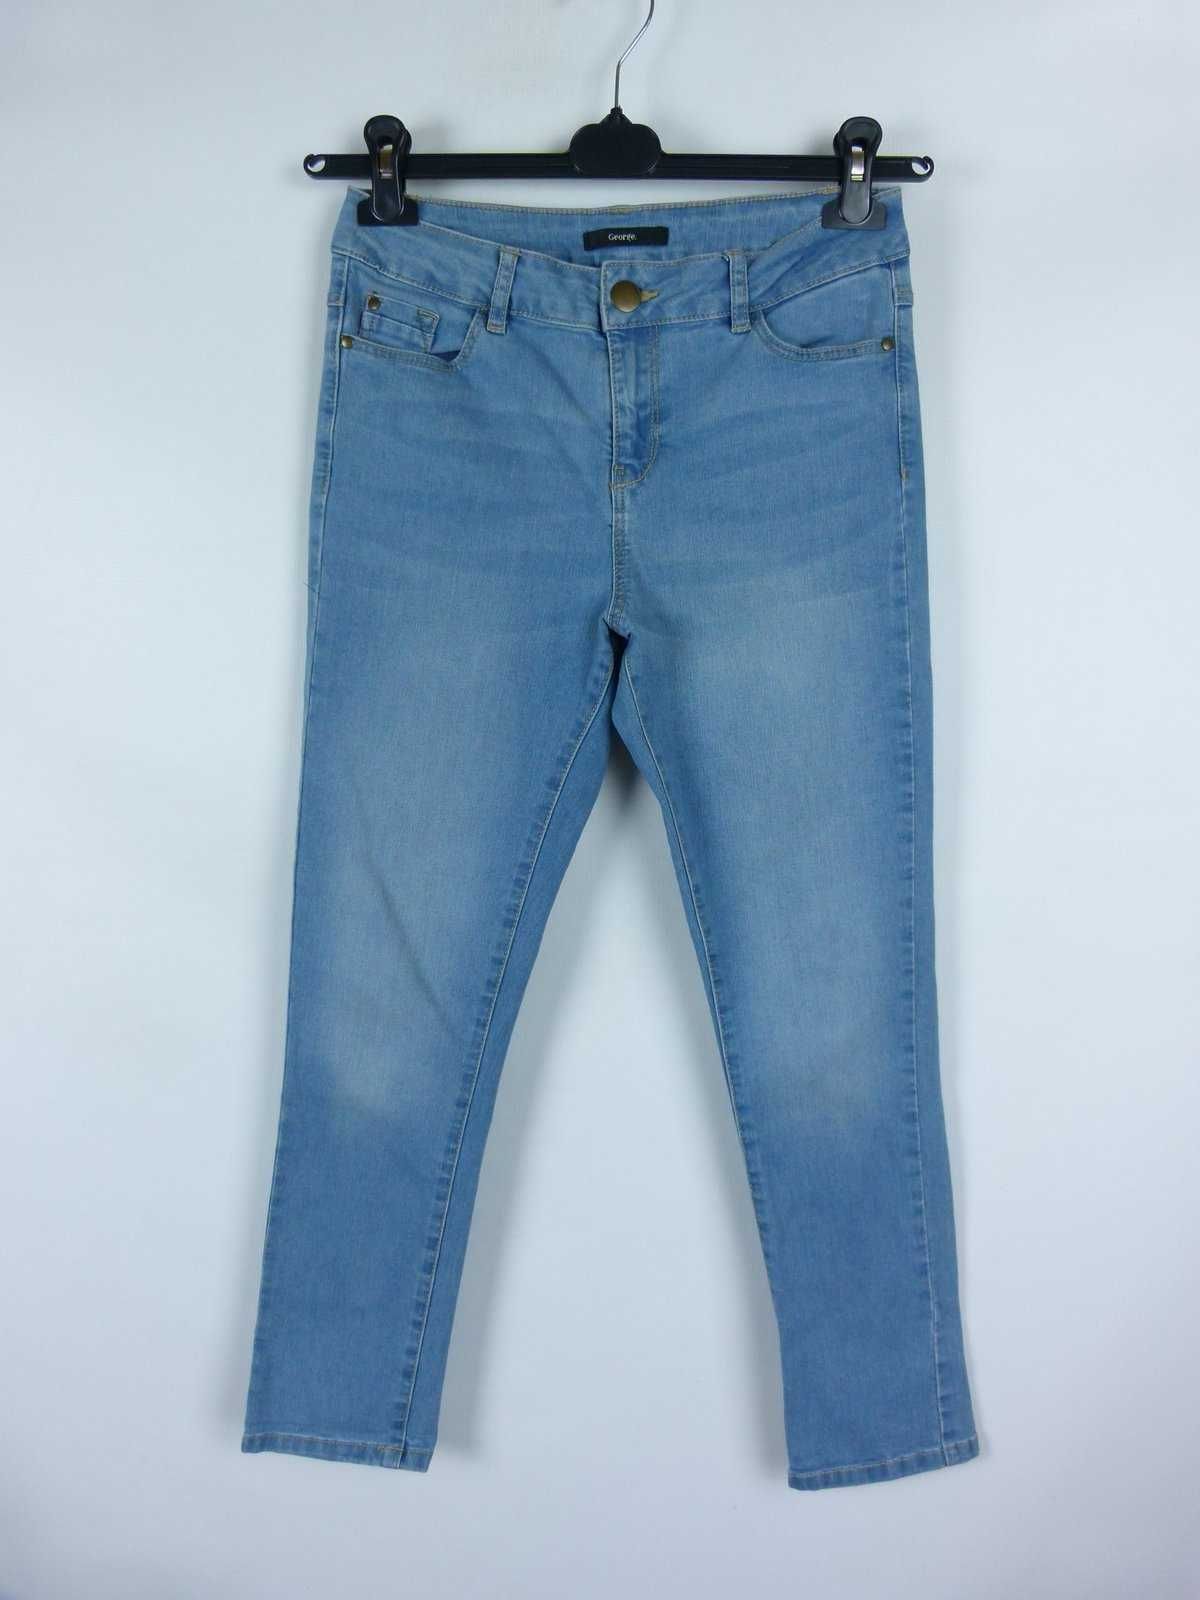 GEORGE damskie spodnie jeans 10 / 38